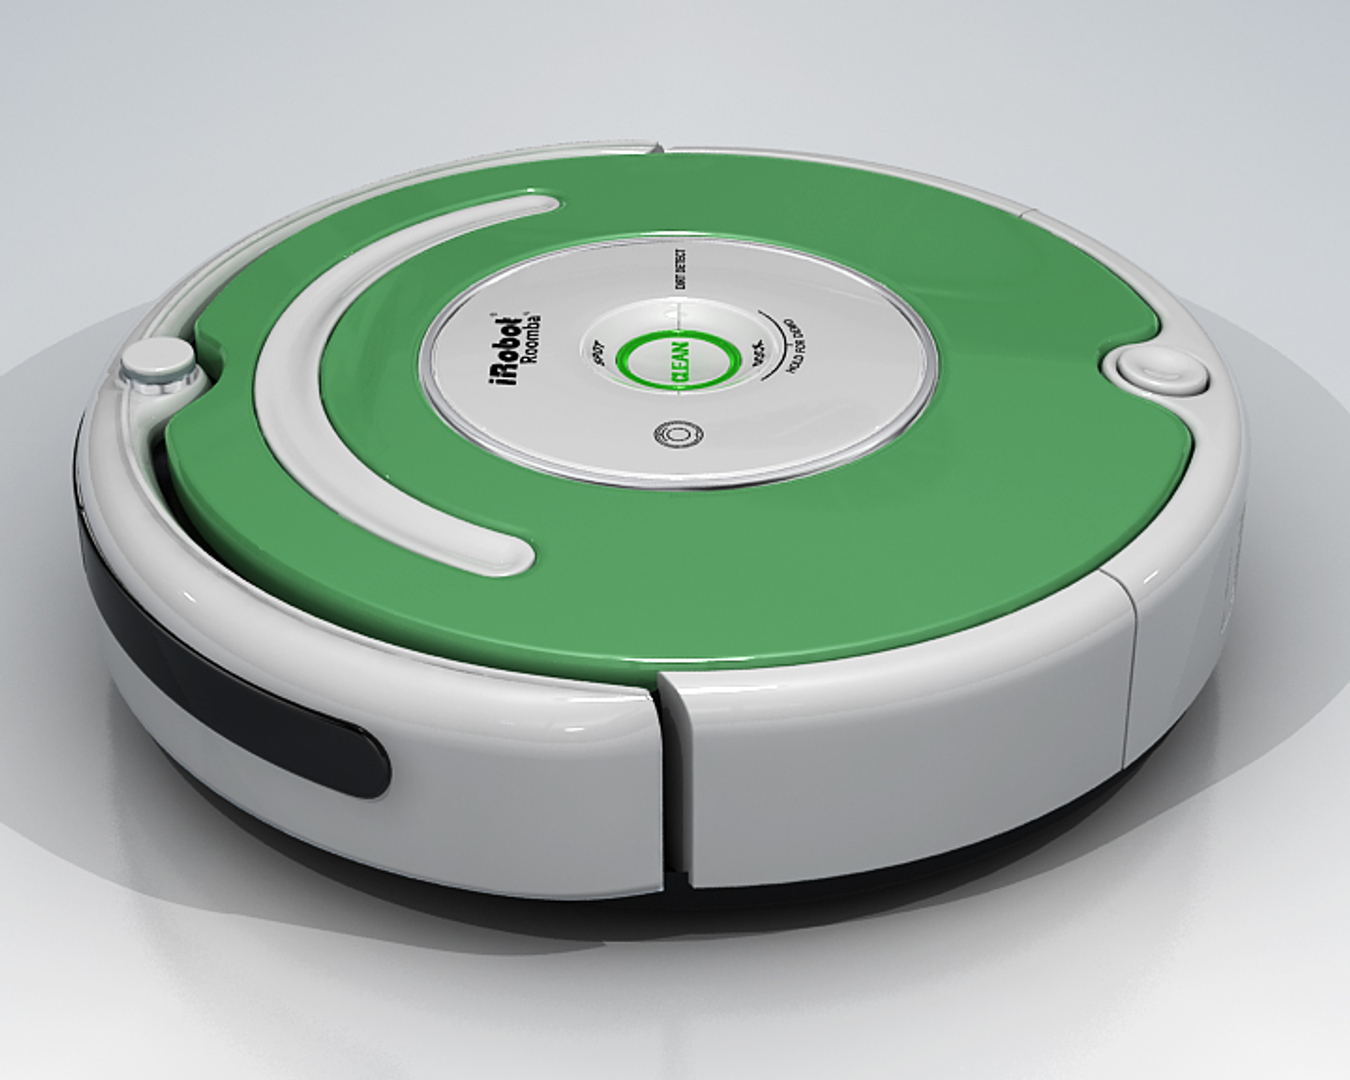 Irobot Roomba 630 3d Model